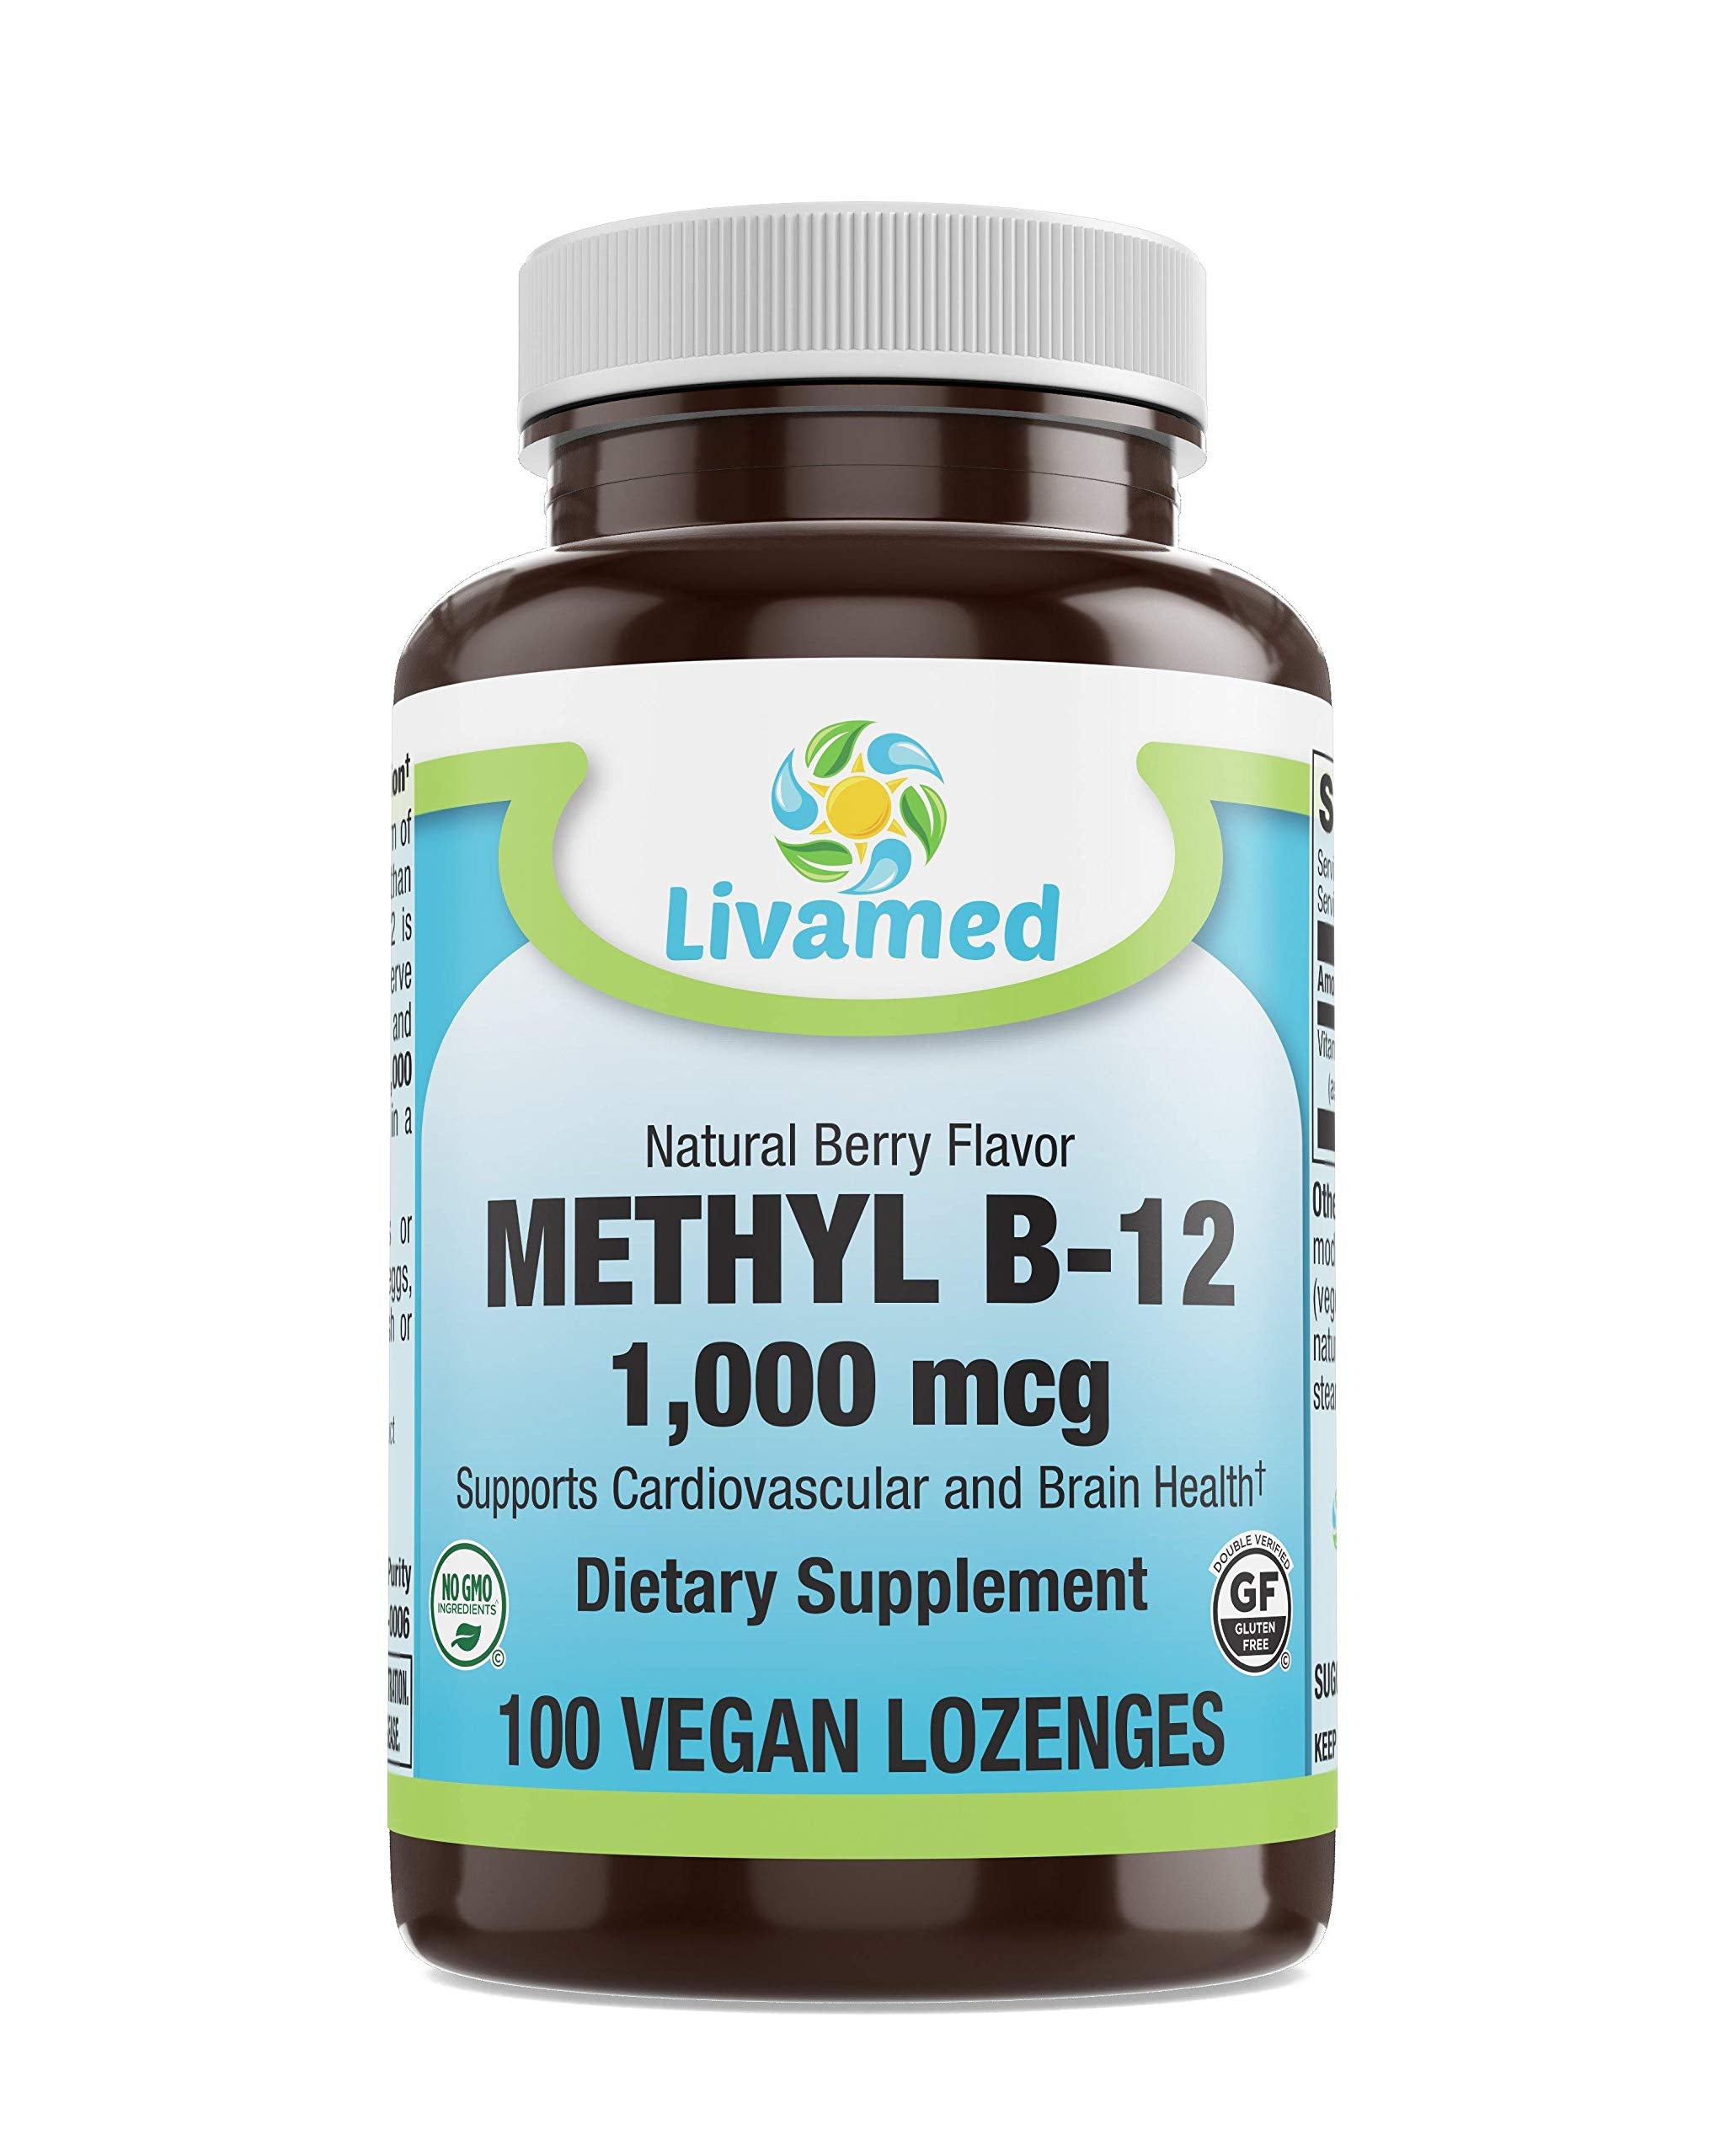 Livamed - Methyl B12 1,000 mcg Veg Lozenge - Natural Berry Flavor 100 Count